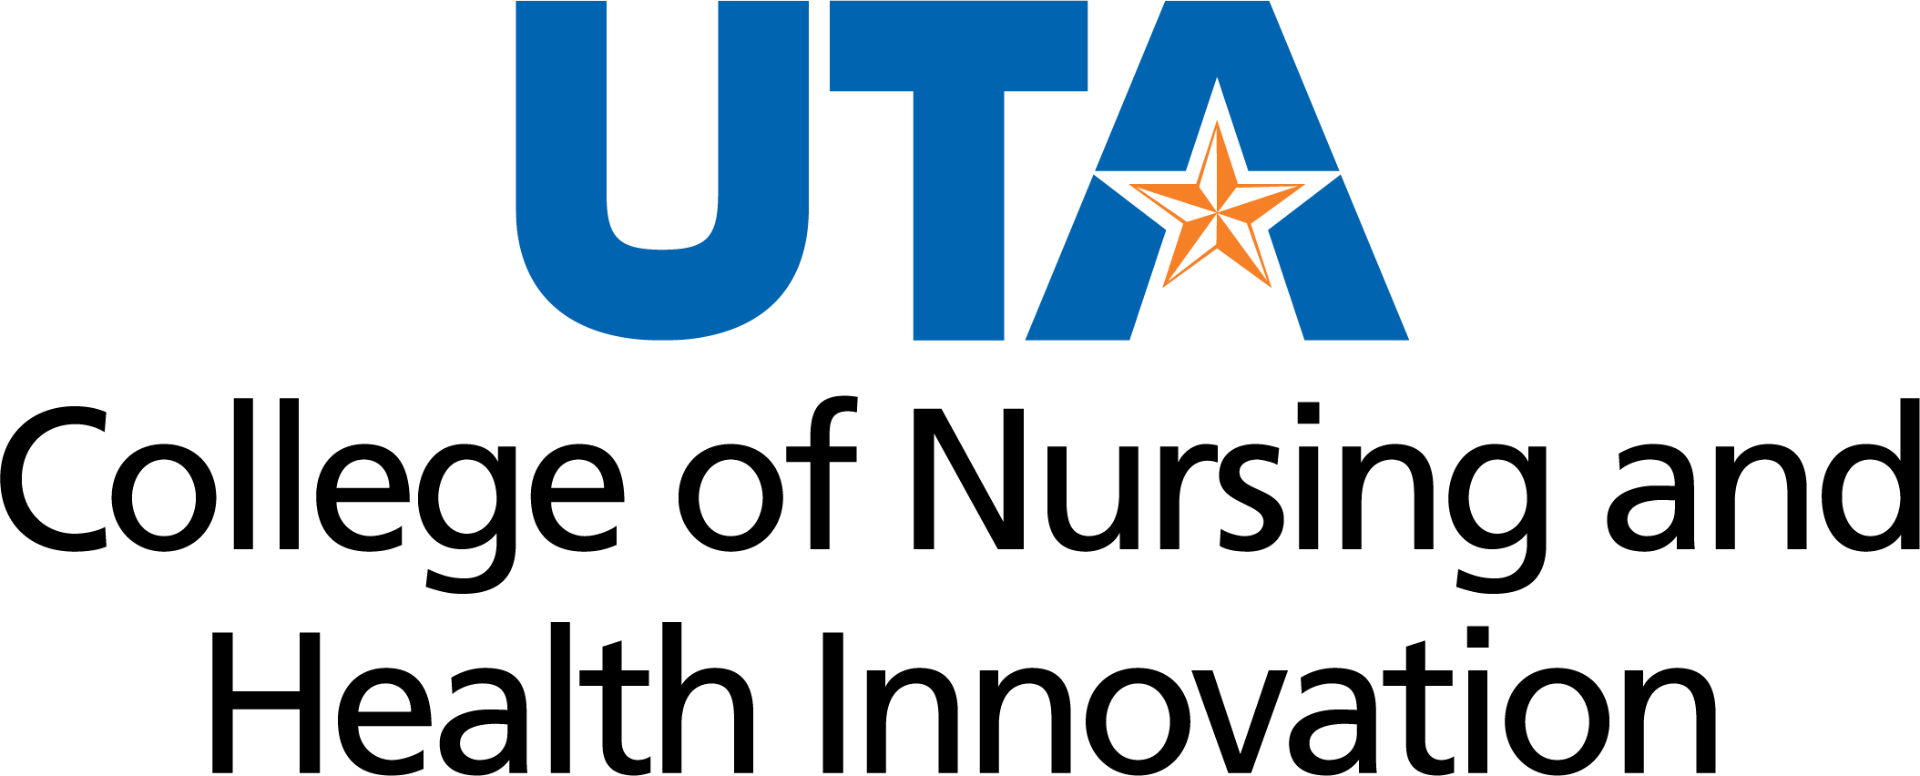 uta college of nursing and health innovation logo